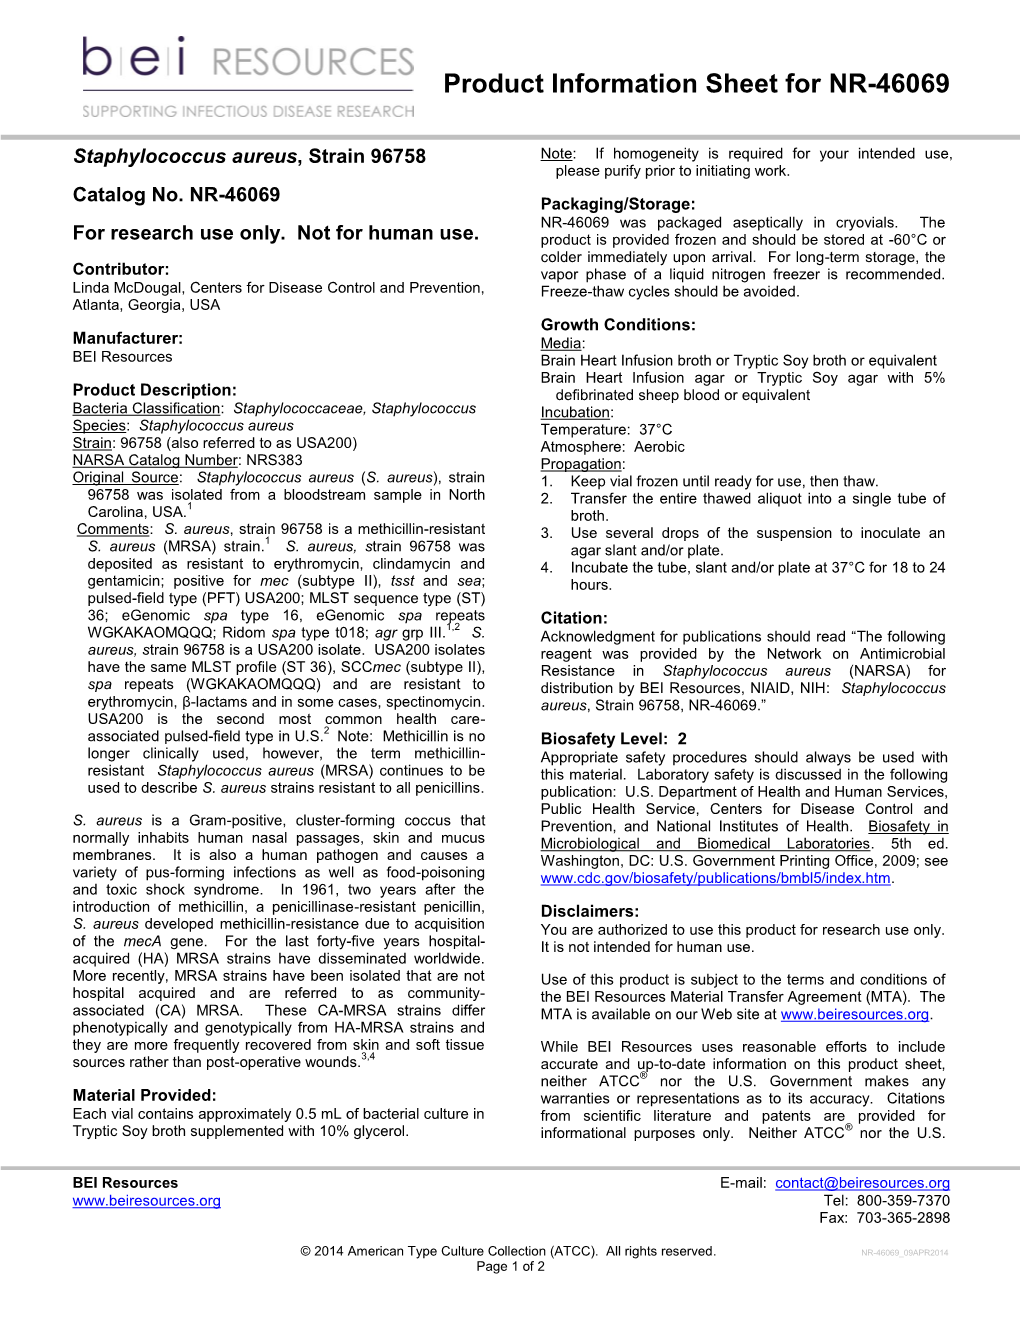 Staphylococcus Aureus, Strain 96758 Catalog No